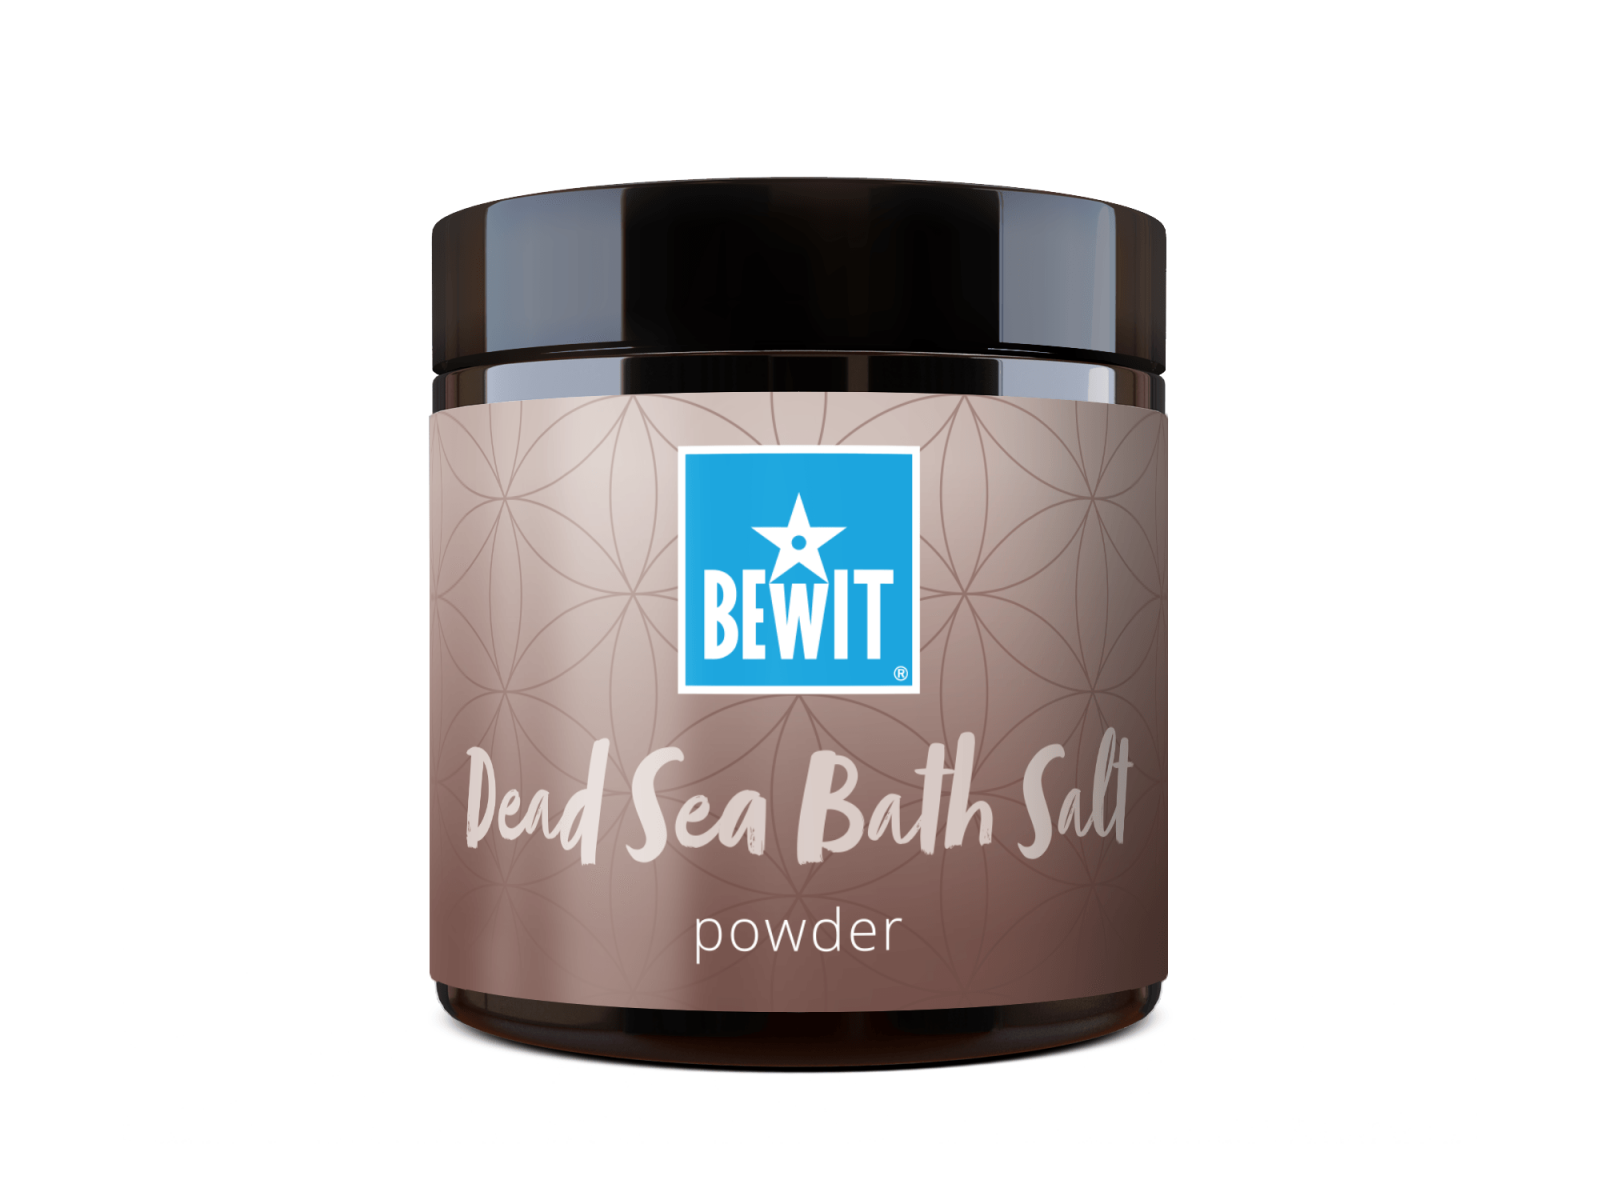 BEWIT Dead Sea salt, powdered - Holistic cosmetics - 1